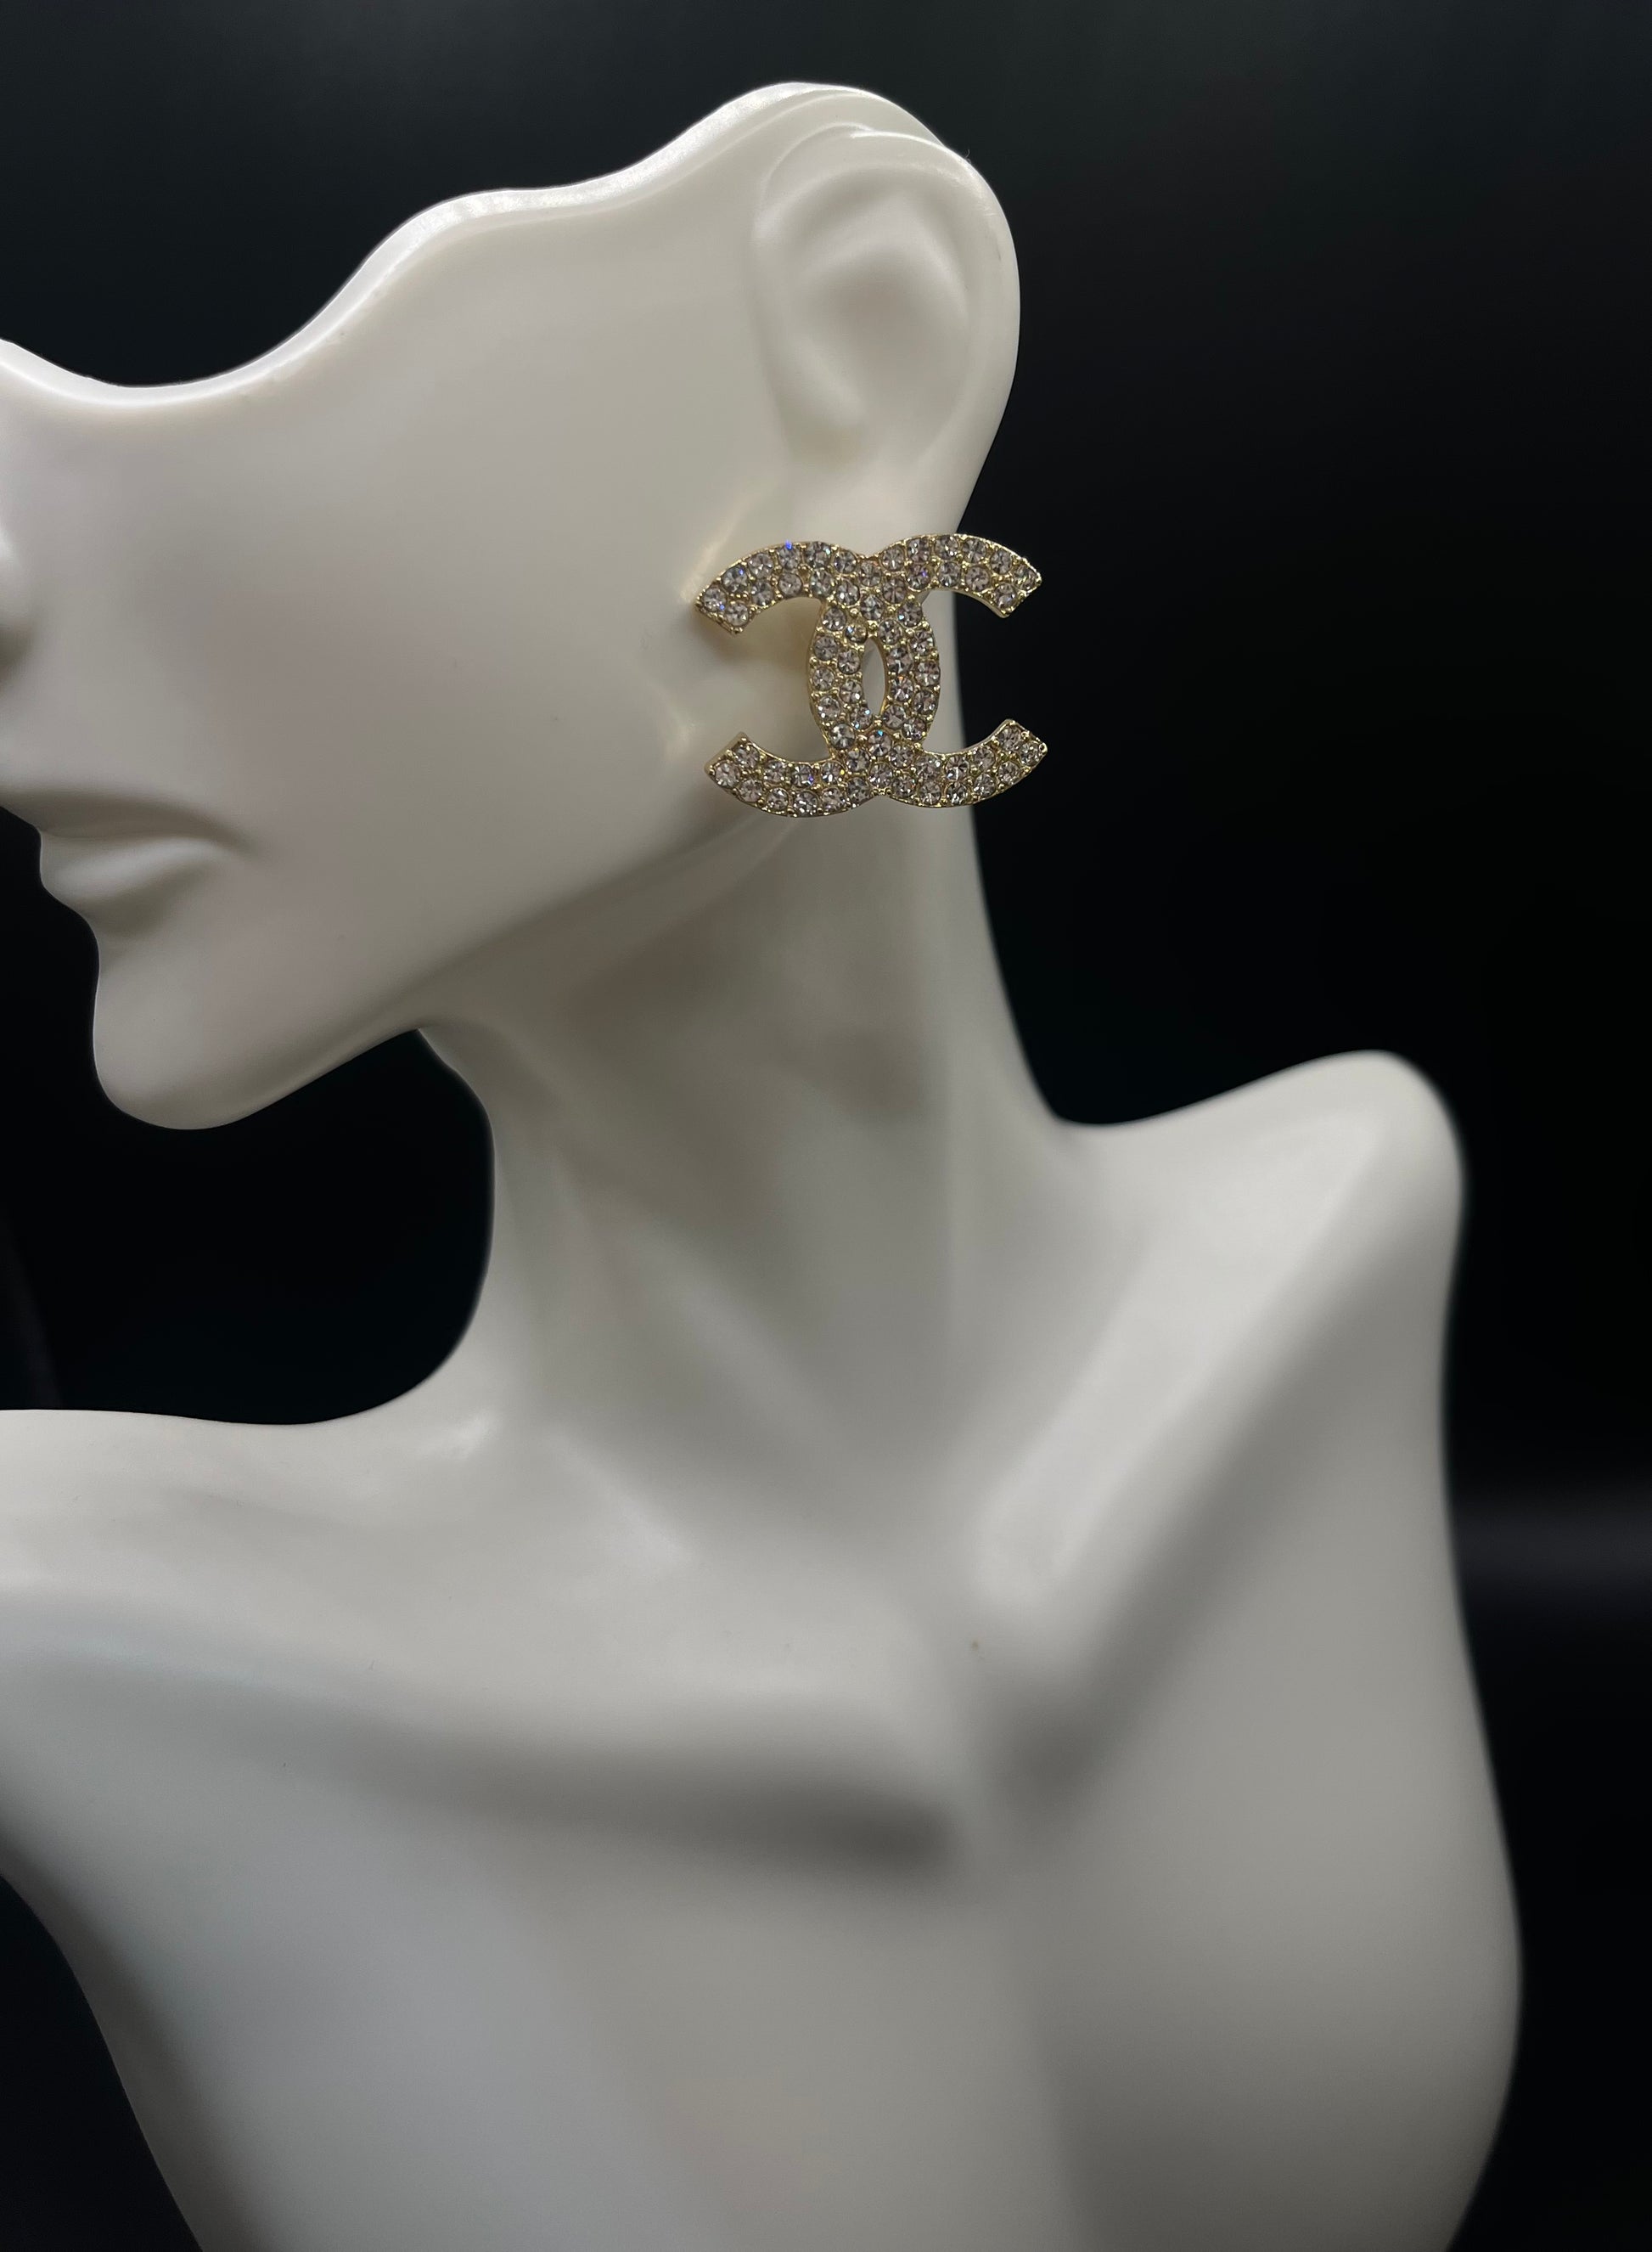 Chanel Mini CC Crystal Stud Earrings - Gold-Tone Metal Stud